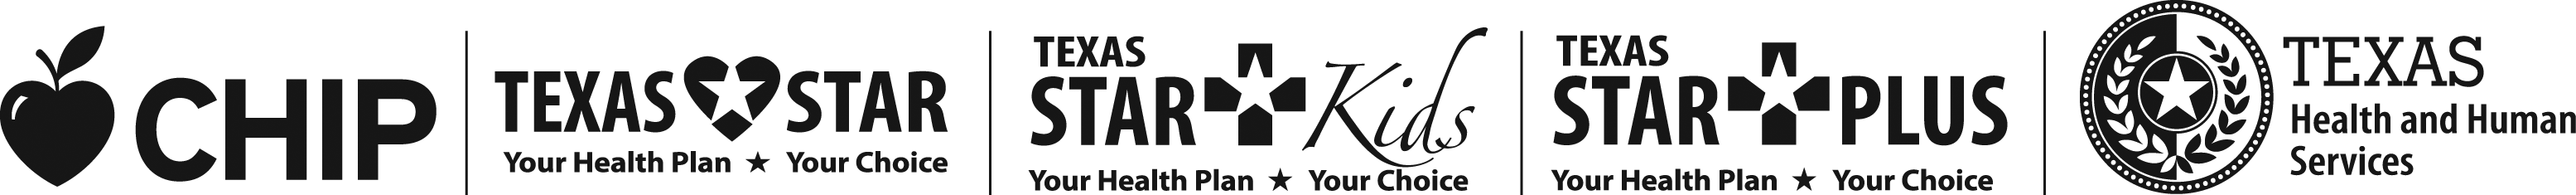 Health Plan Logos